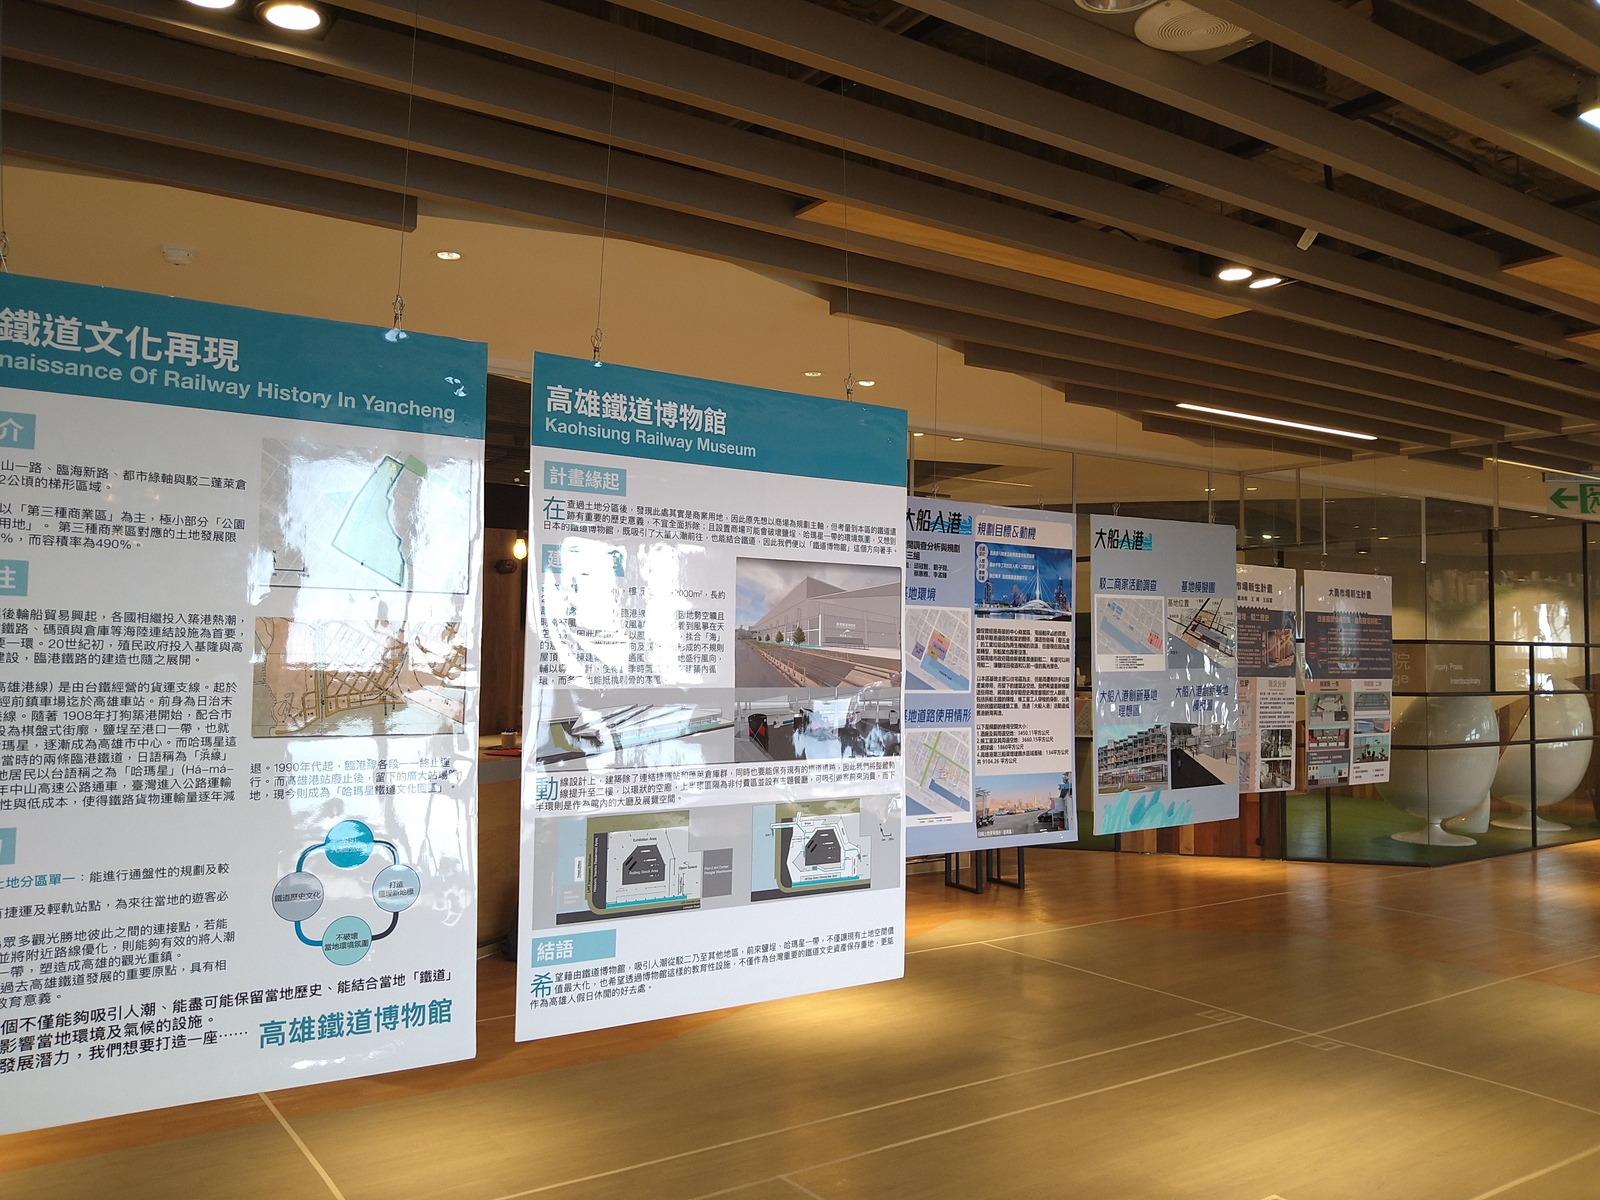 Students propose ideas for spatial development improvement for Yancheng District